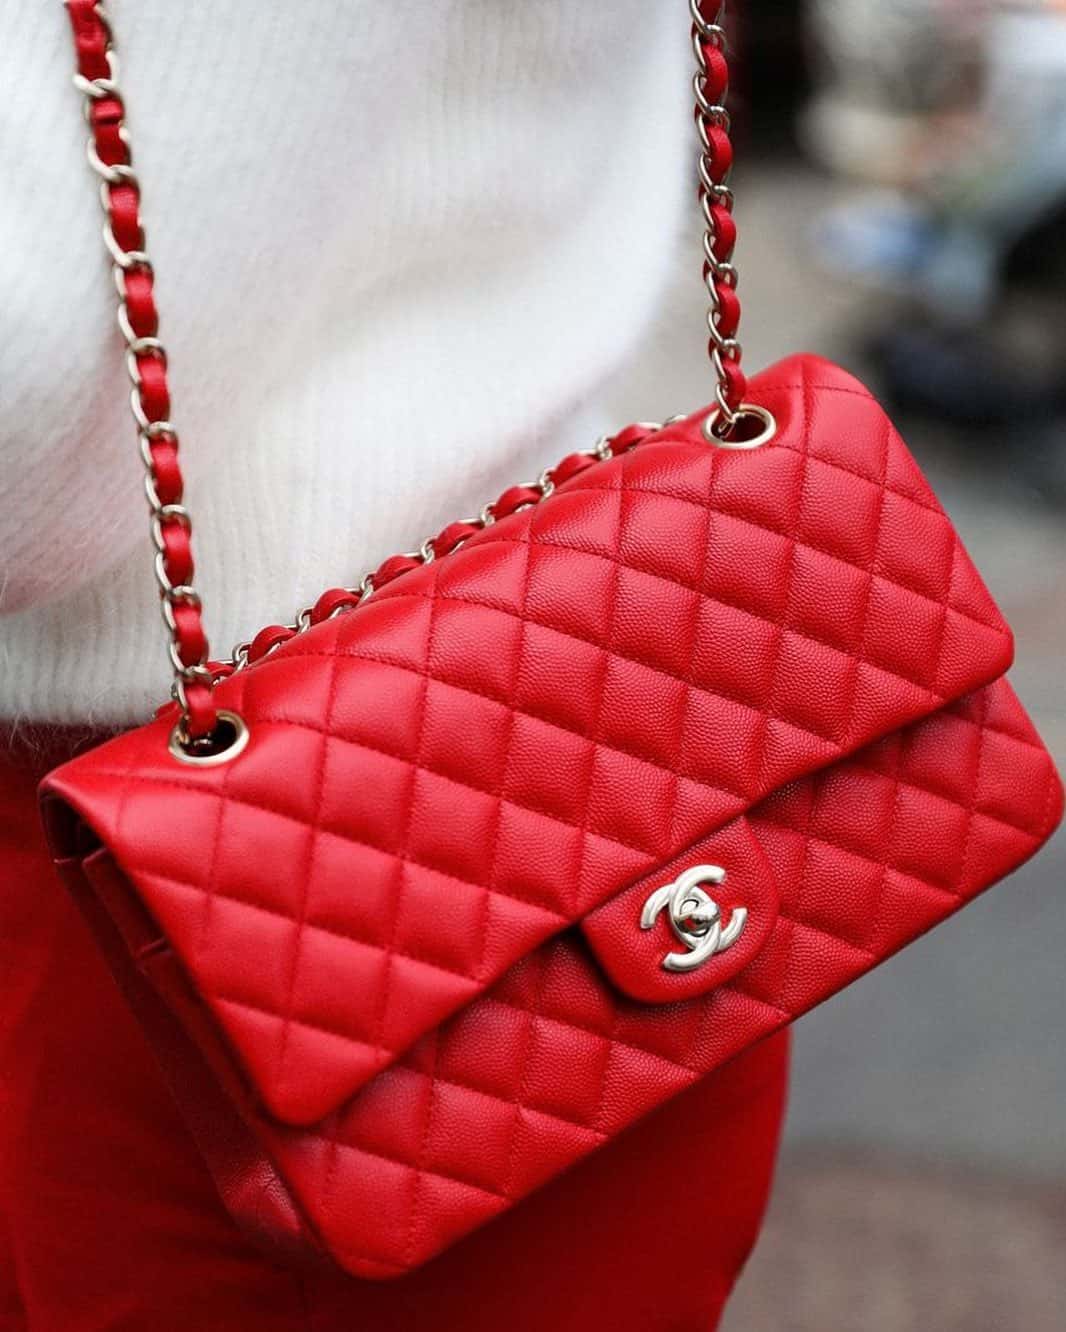 Top 71 về red chanel handbags mới nhất  cdgdbentreeduvn